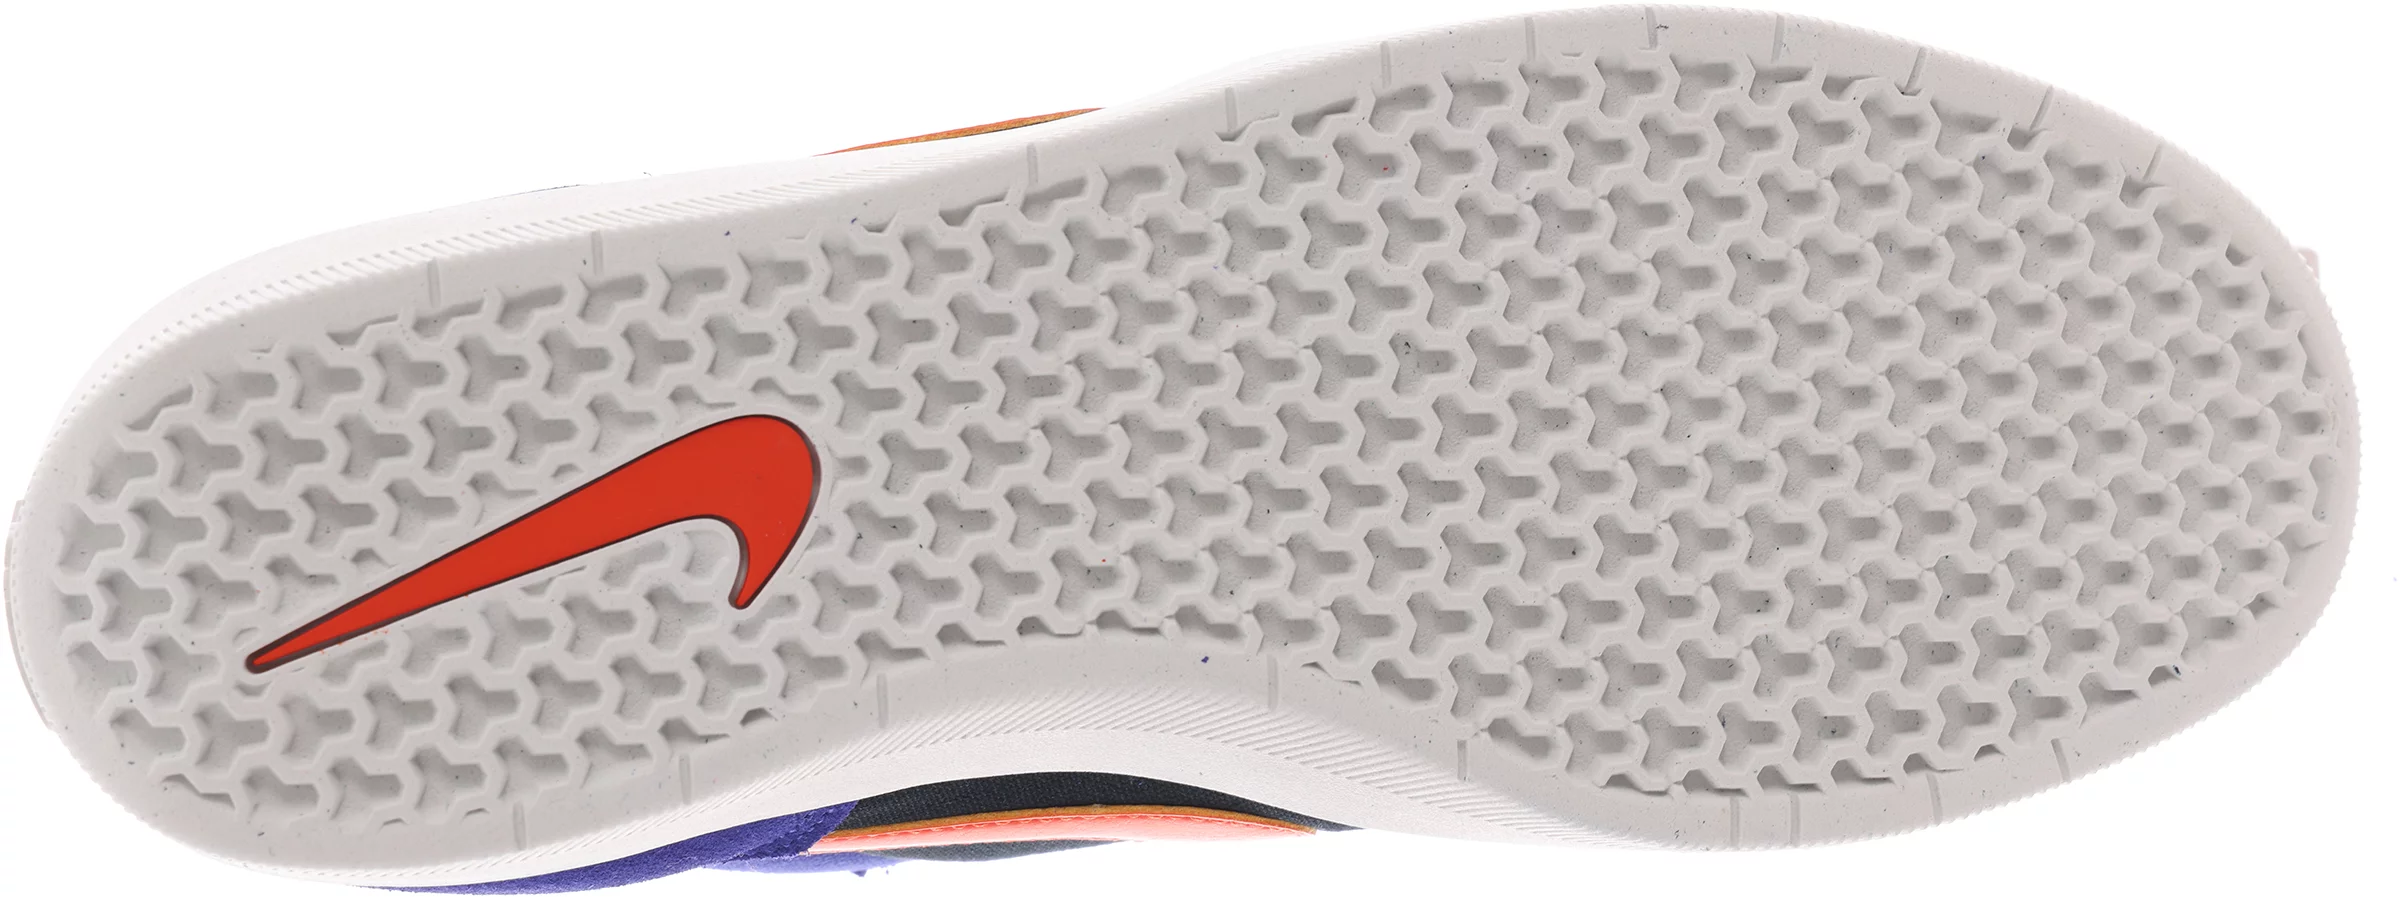 Nike SB Force 58 Skate Shoes - concord/team orange-black-concord